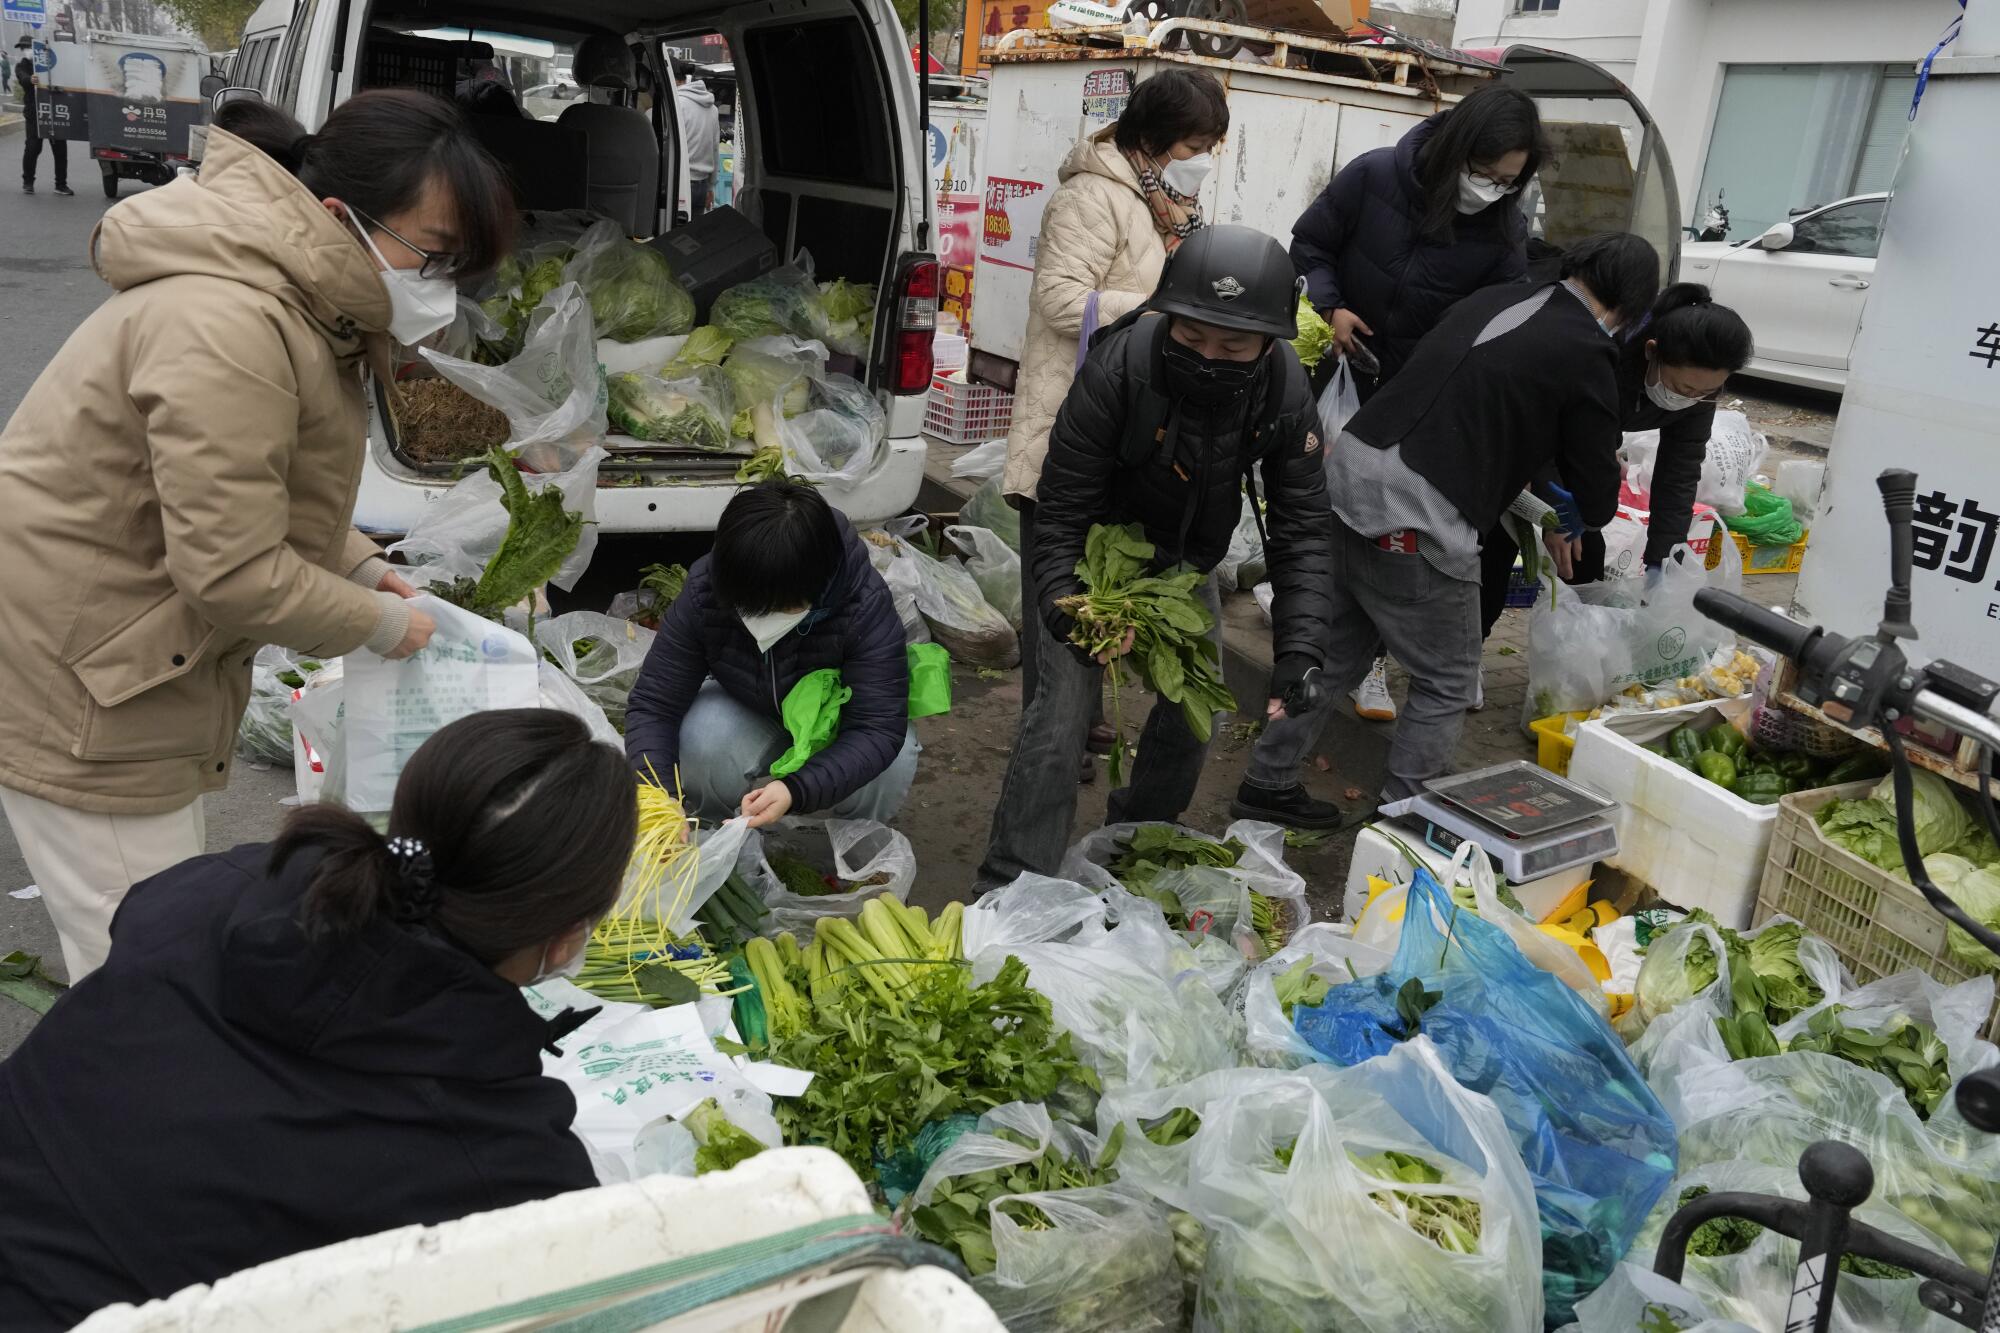 People buying vegetables from street vendors in Beijing